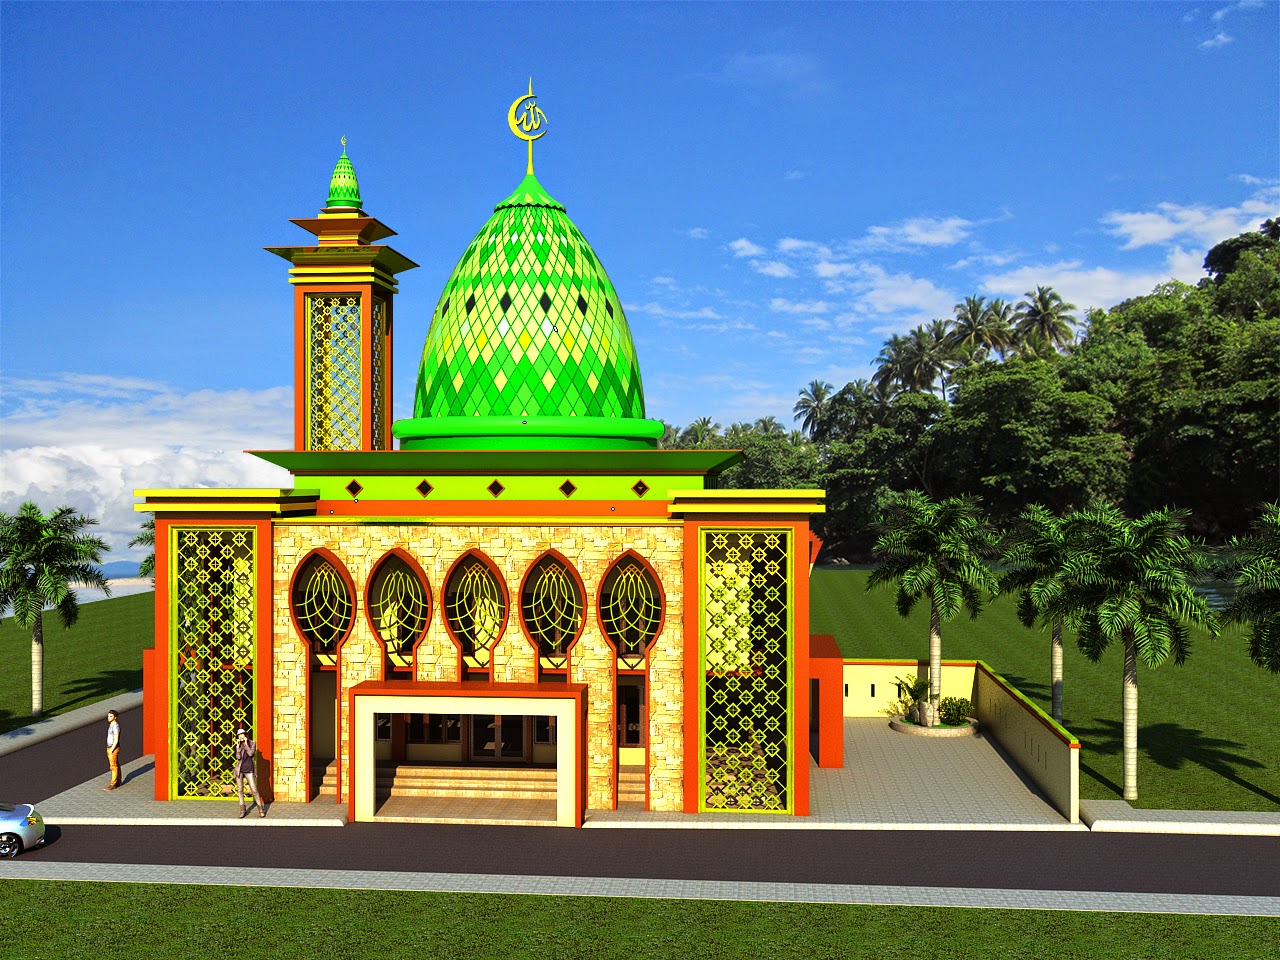 53 Model Desain Masjid Minimalis Modern Unik Terbaru 2018 